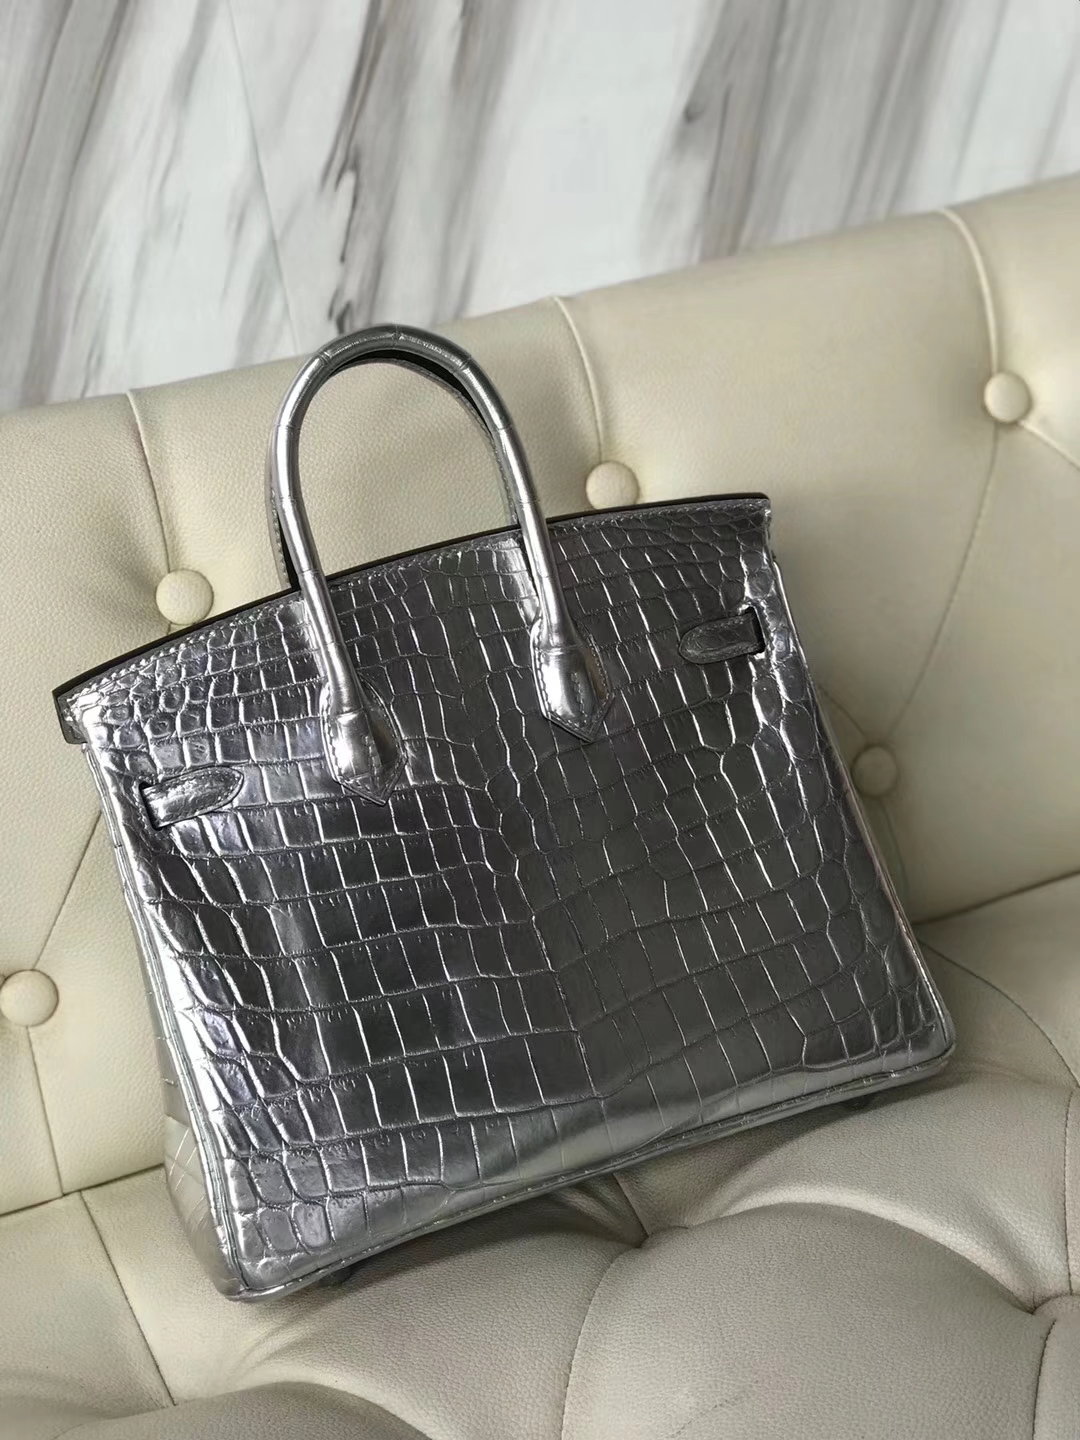 Luxury Hermes Silver Crocodile Shiny Leather Birkin25CM Tote Bag Silver Hardware